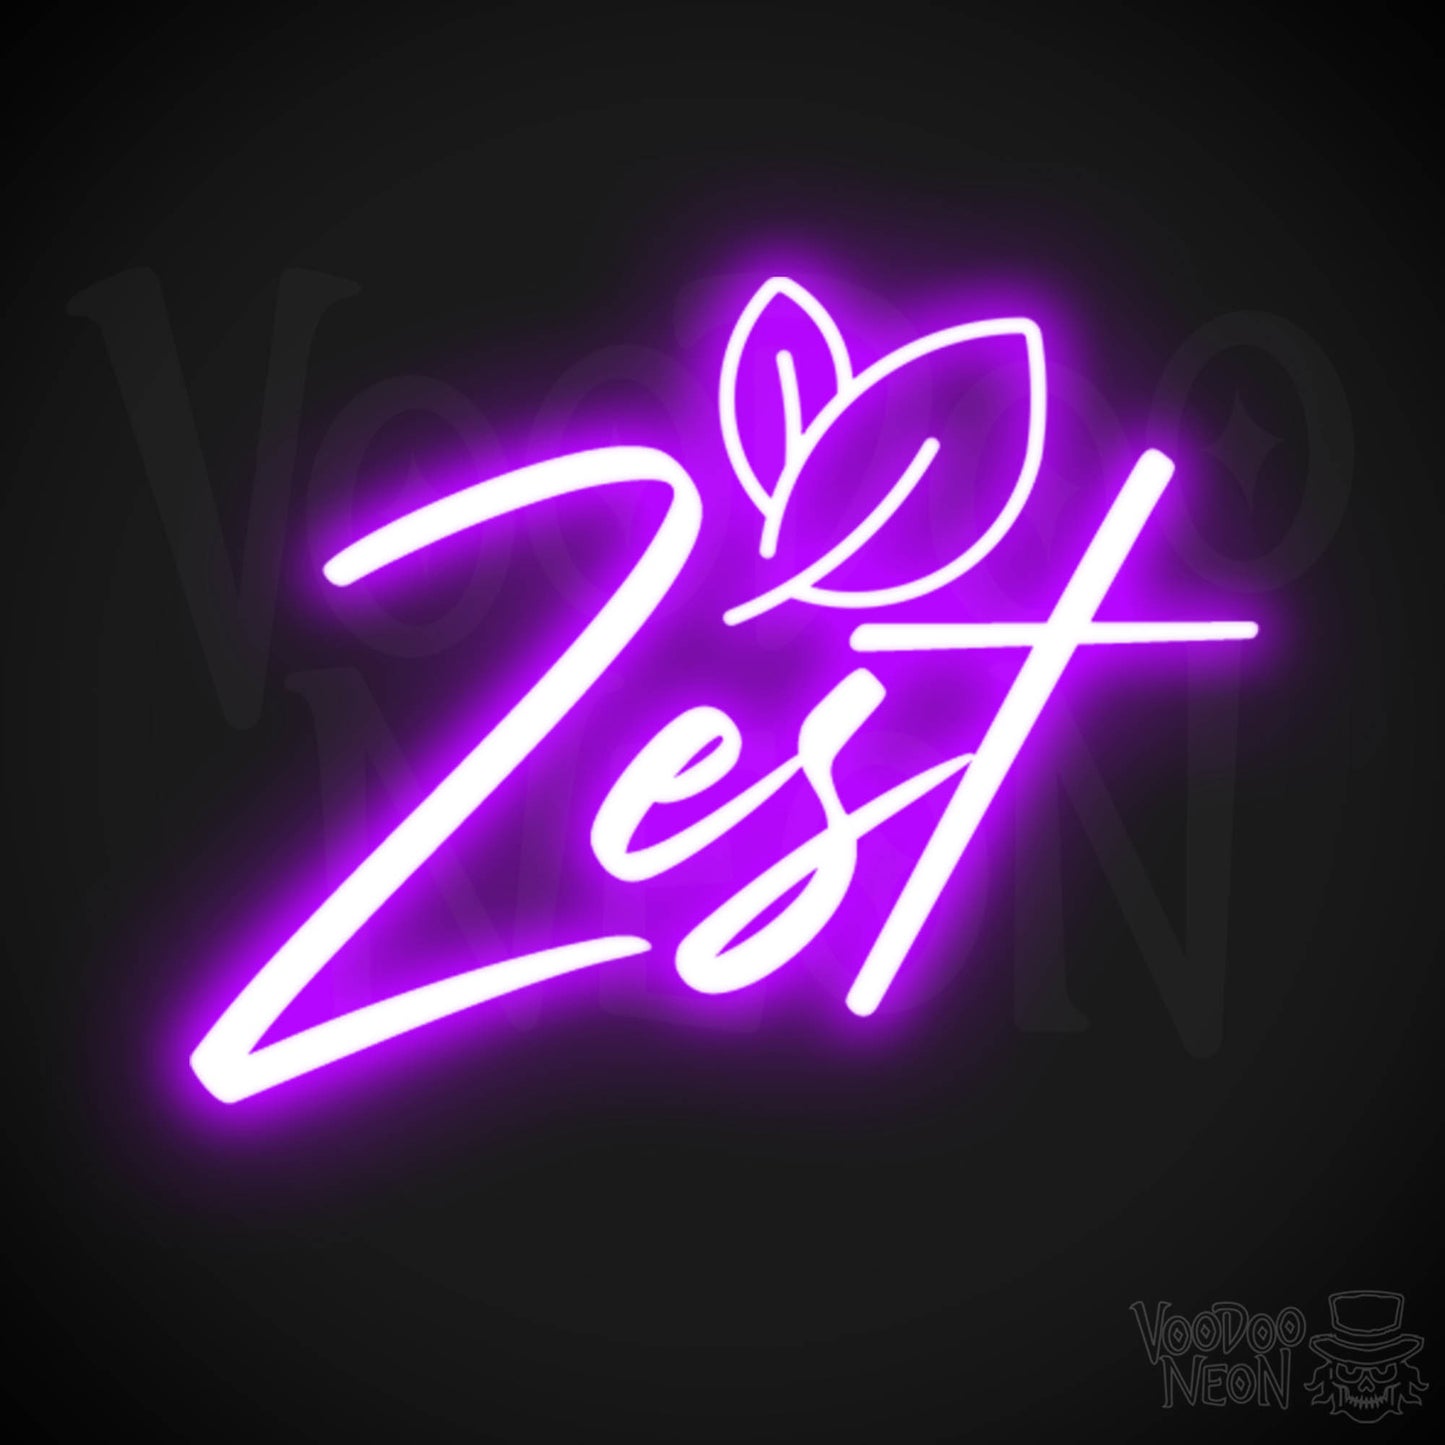 Zest Neon Sign - Neon Zest Sign - Color Purple